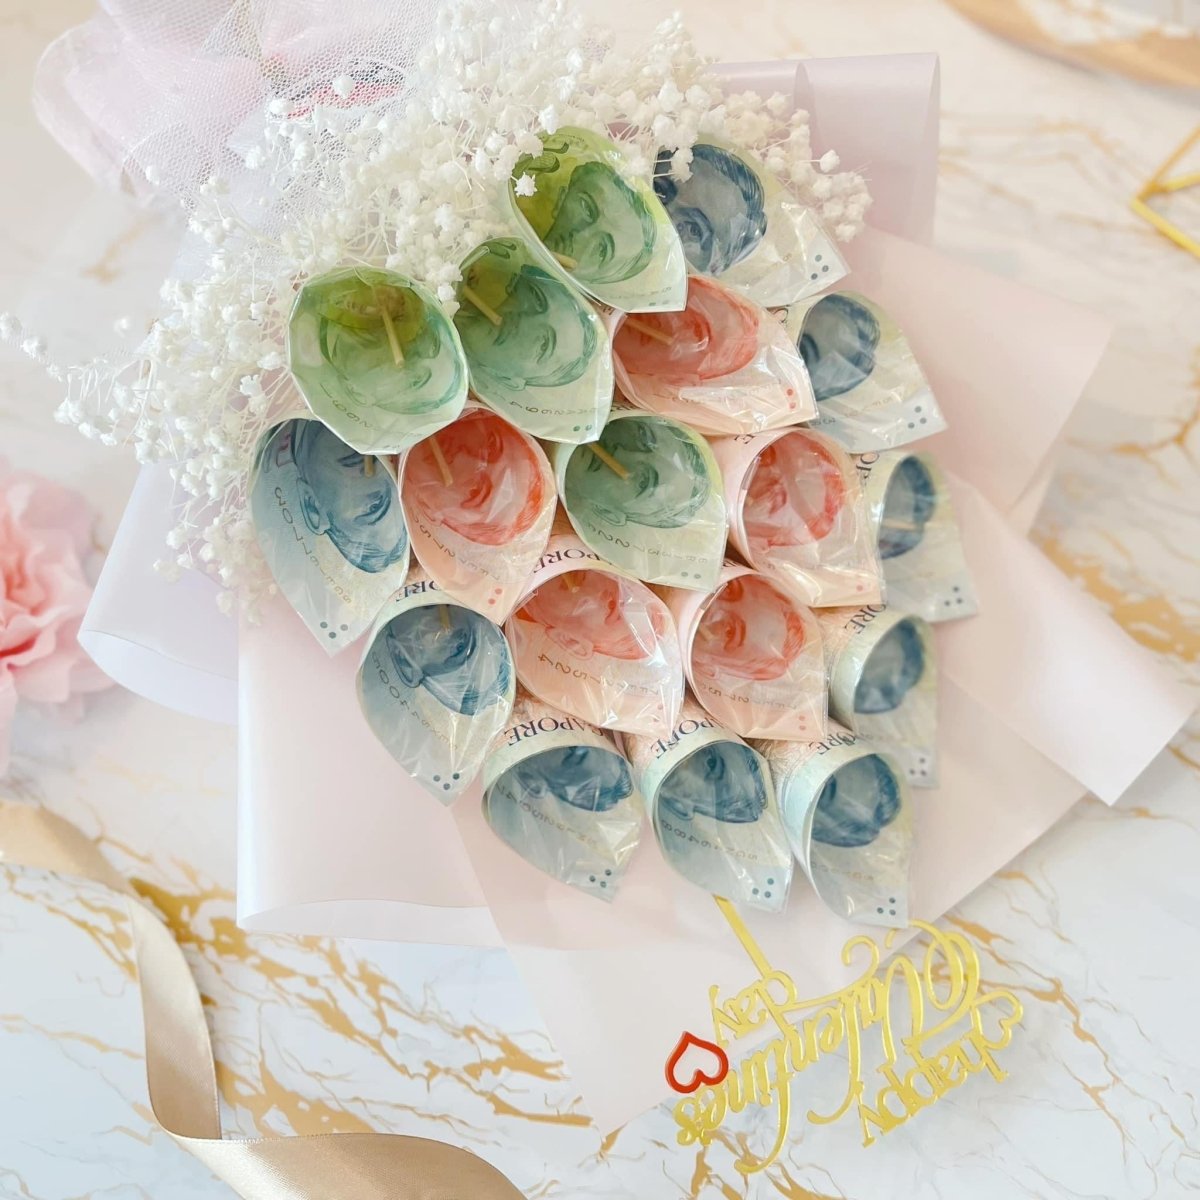 $520 I Love You Bouquet - Luxury Cash Money Bouquet( 5 days Preorder) - Rainbowly Fresh Fruit Gift and Flower Arrangments